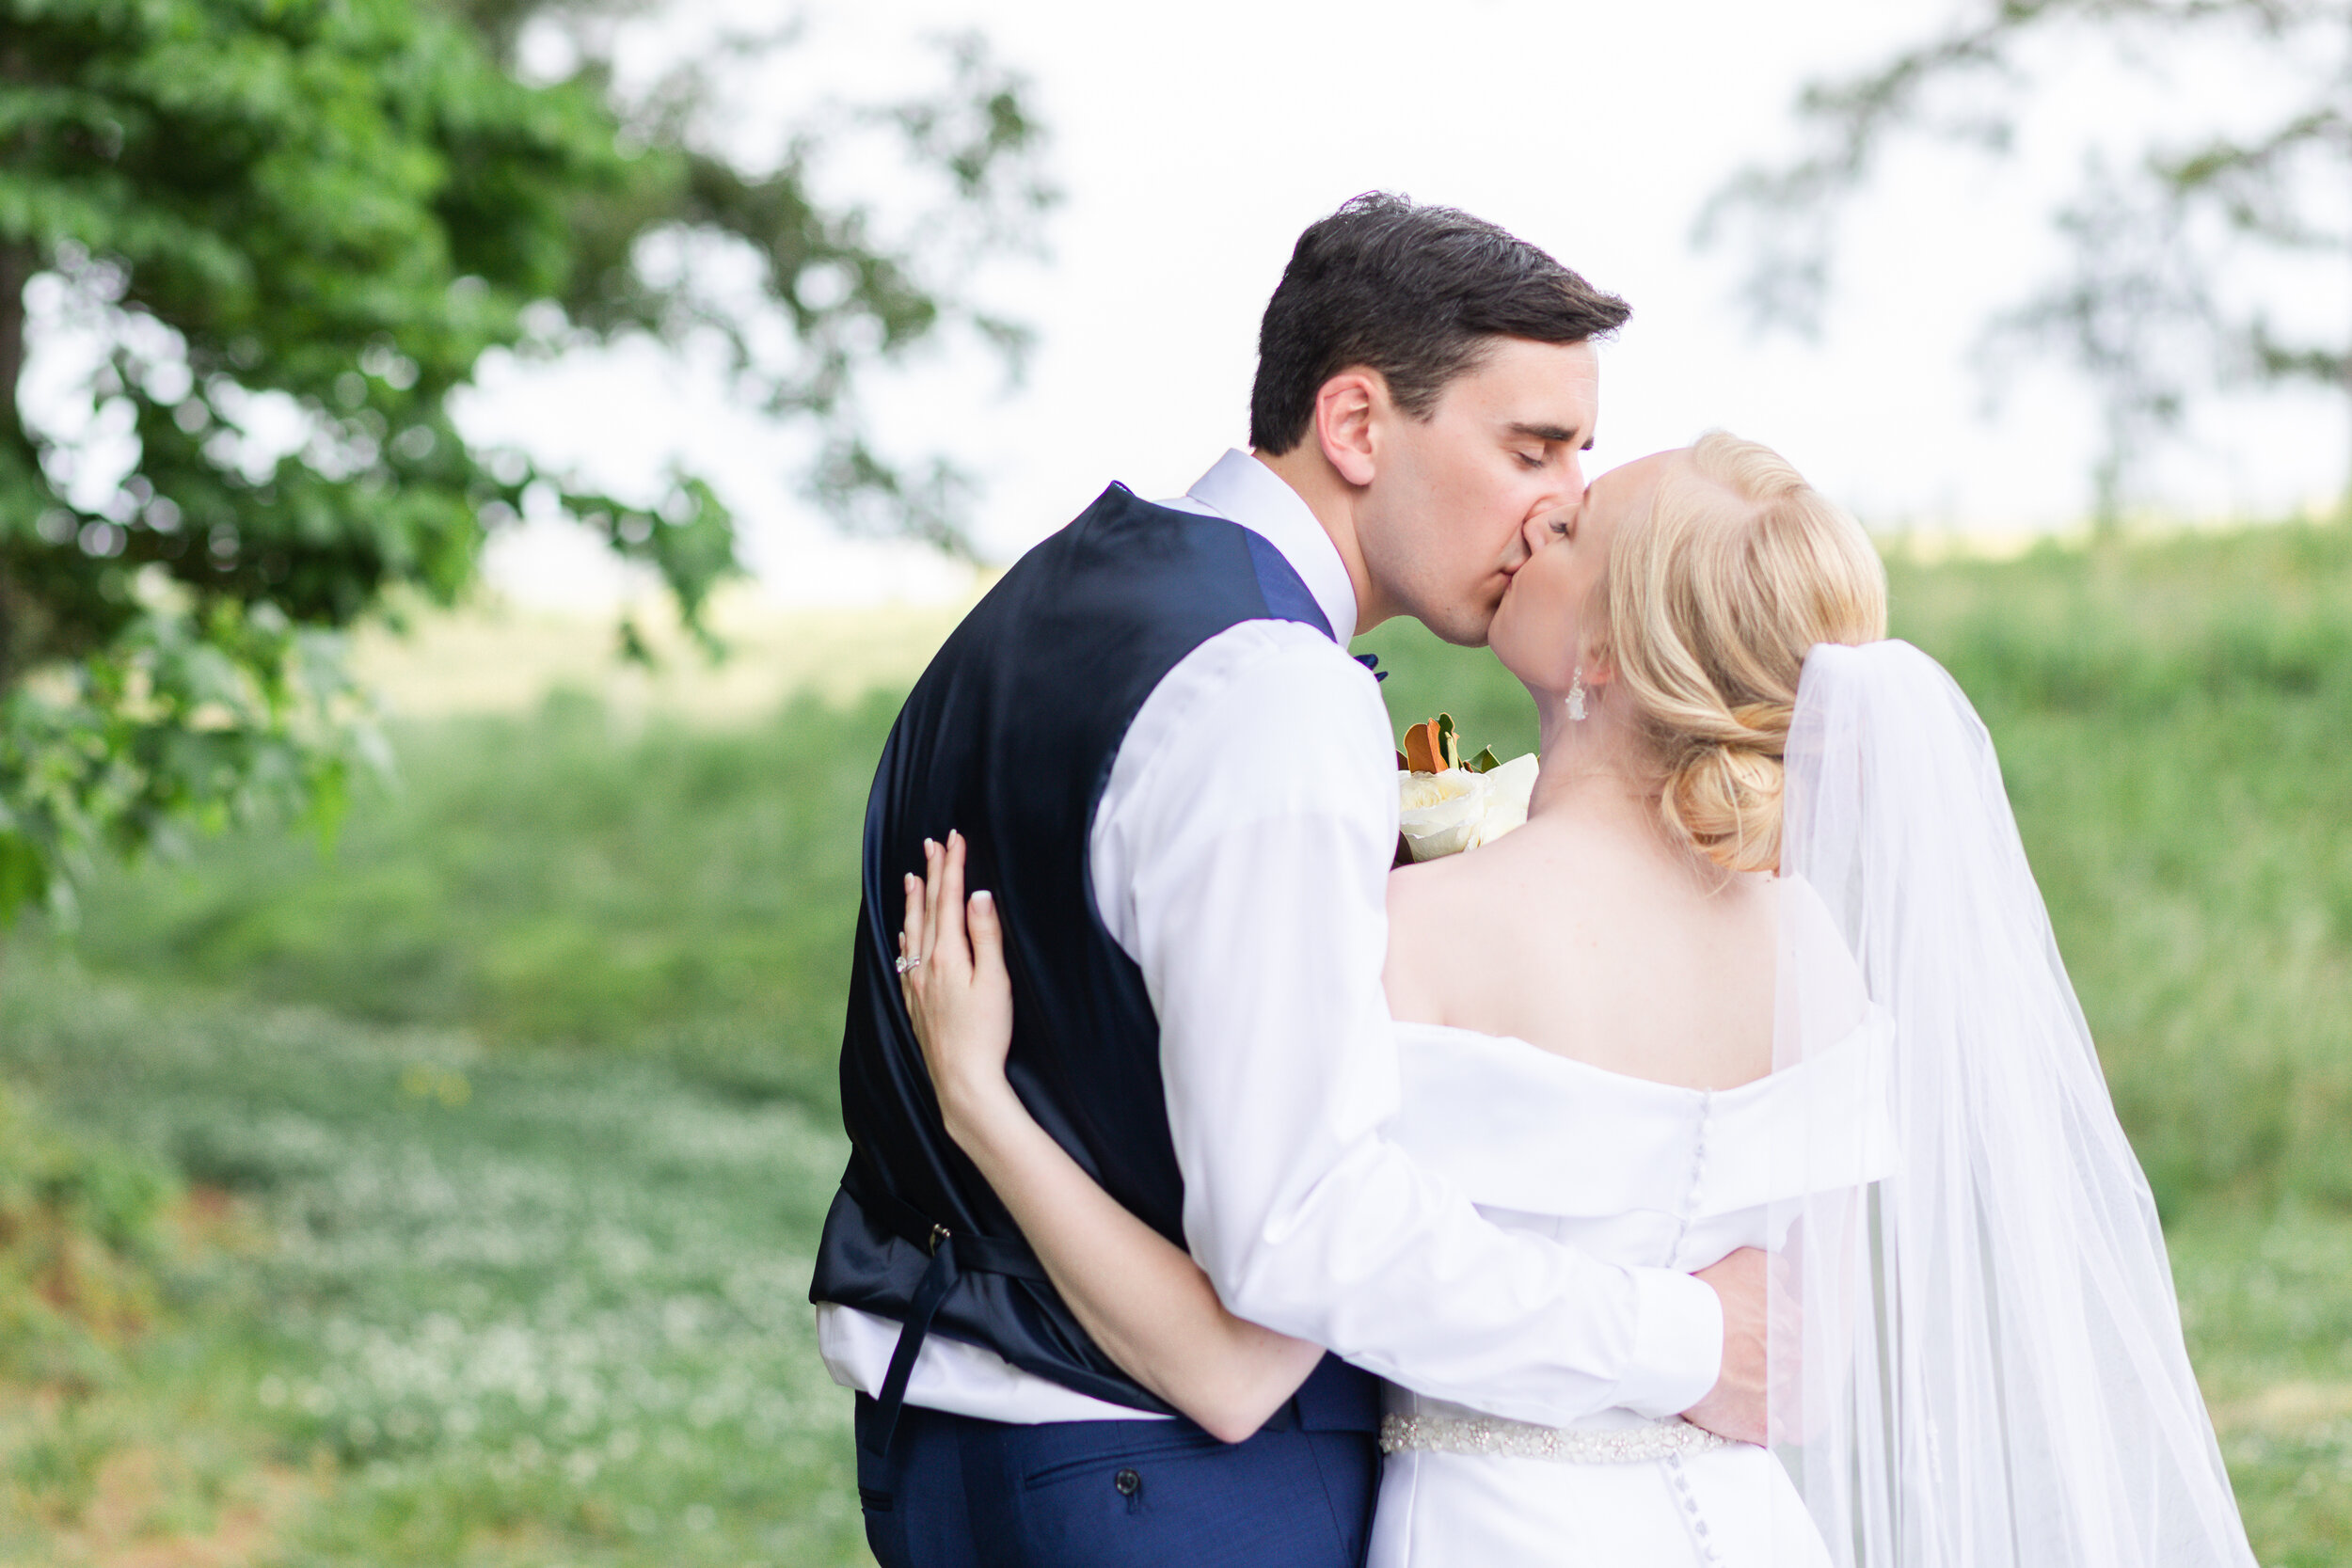 An Intimate Wedding Celebration | Abigail + Cody 